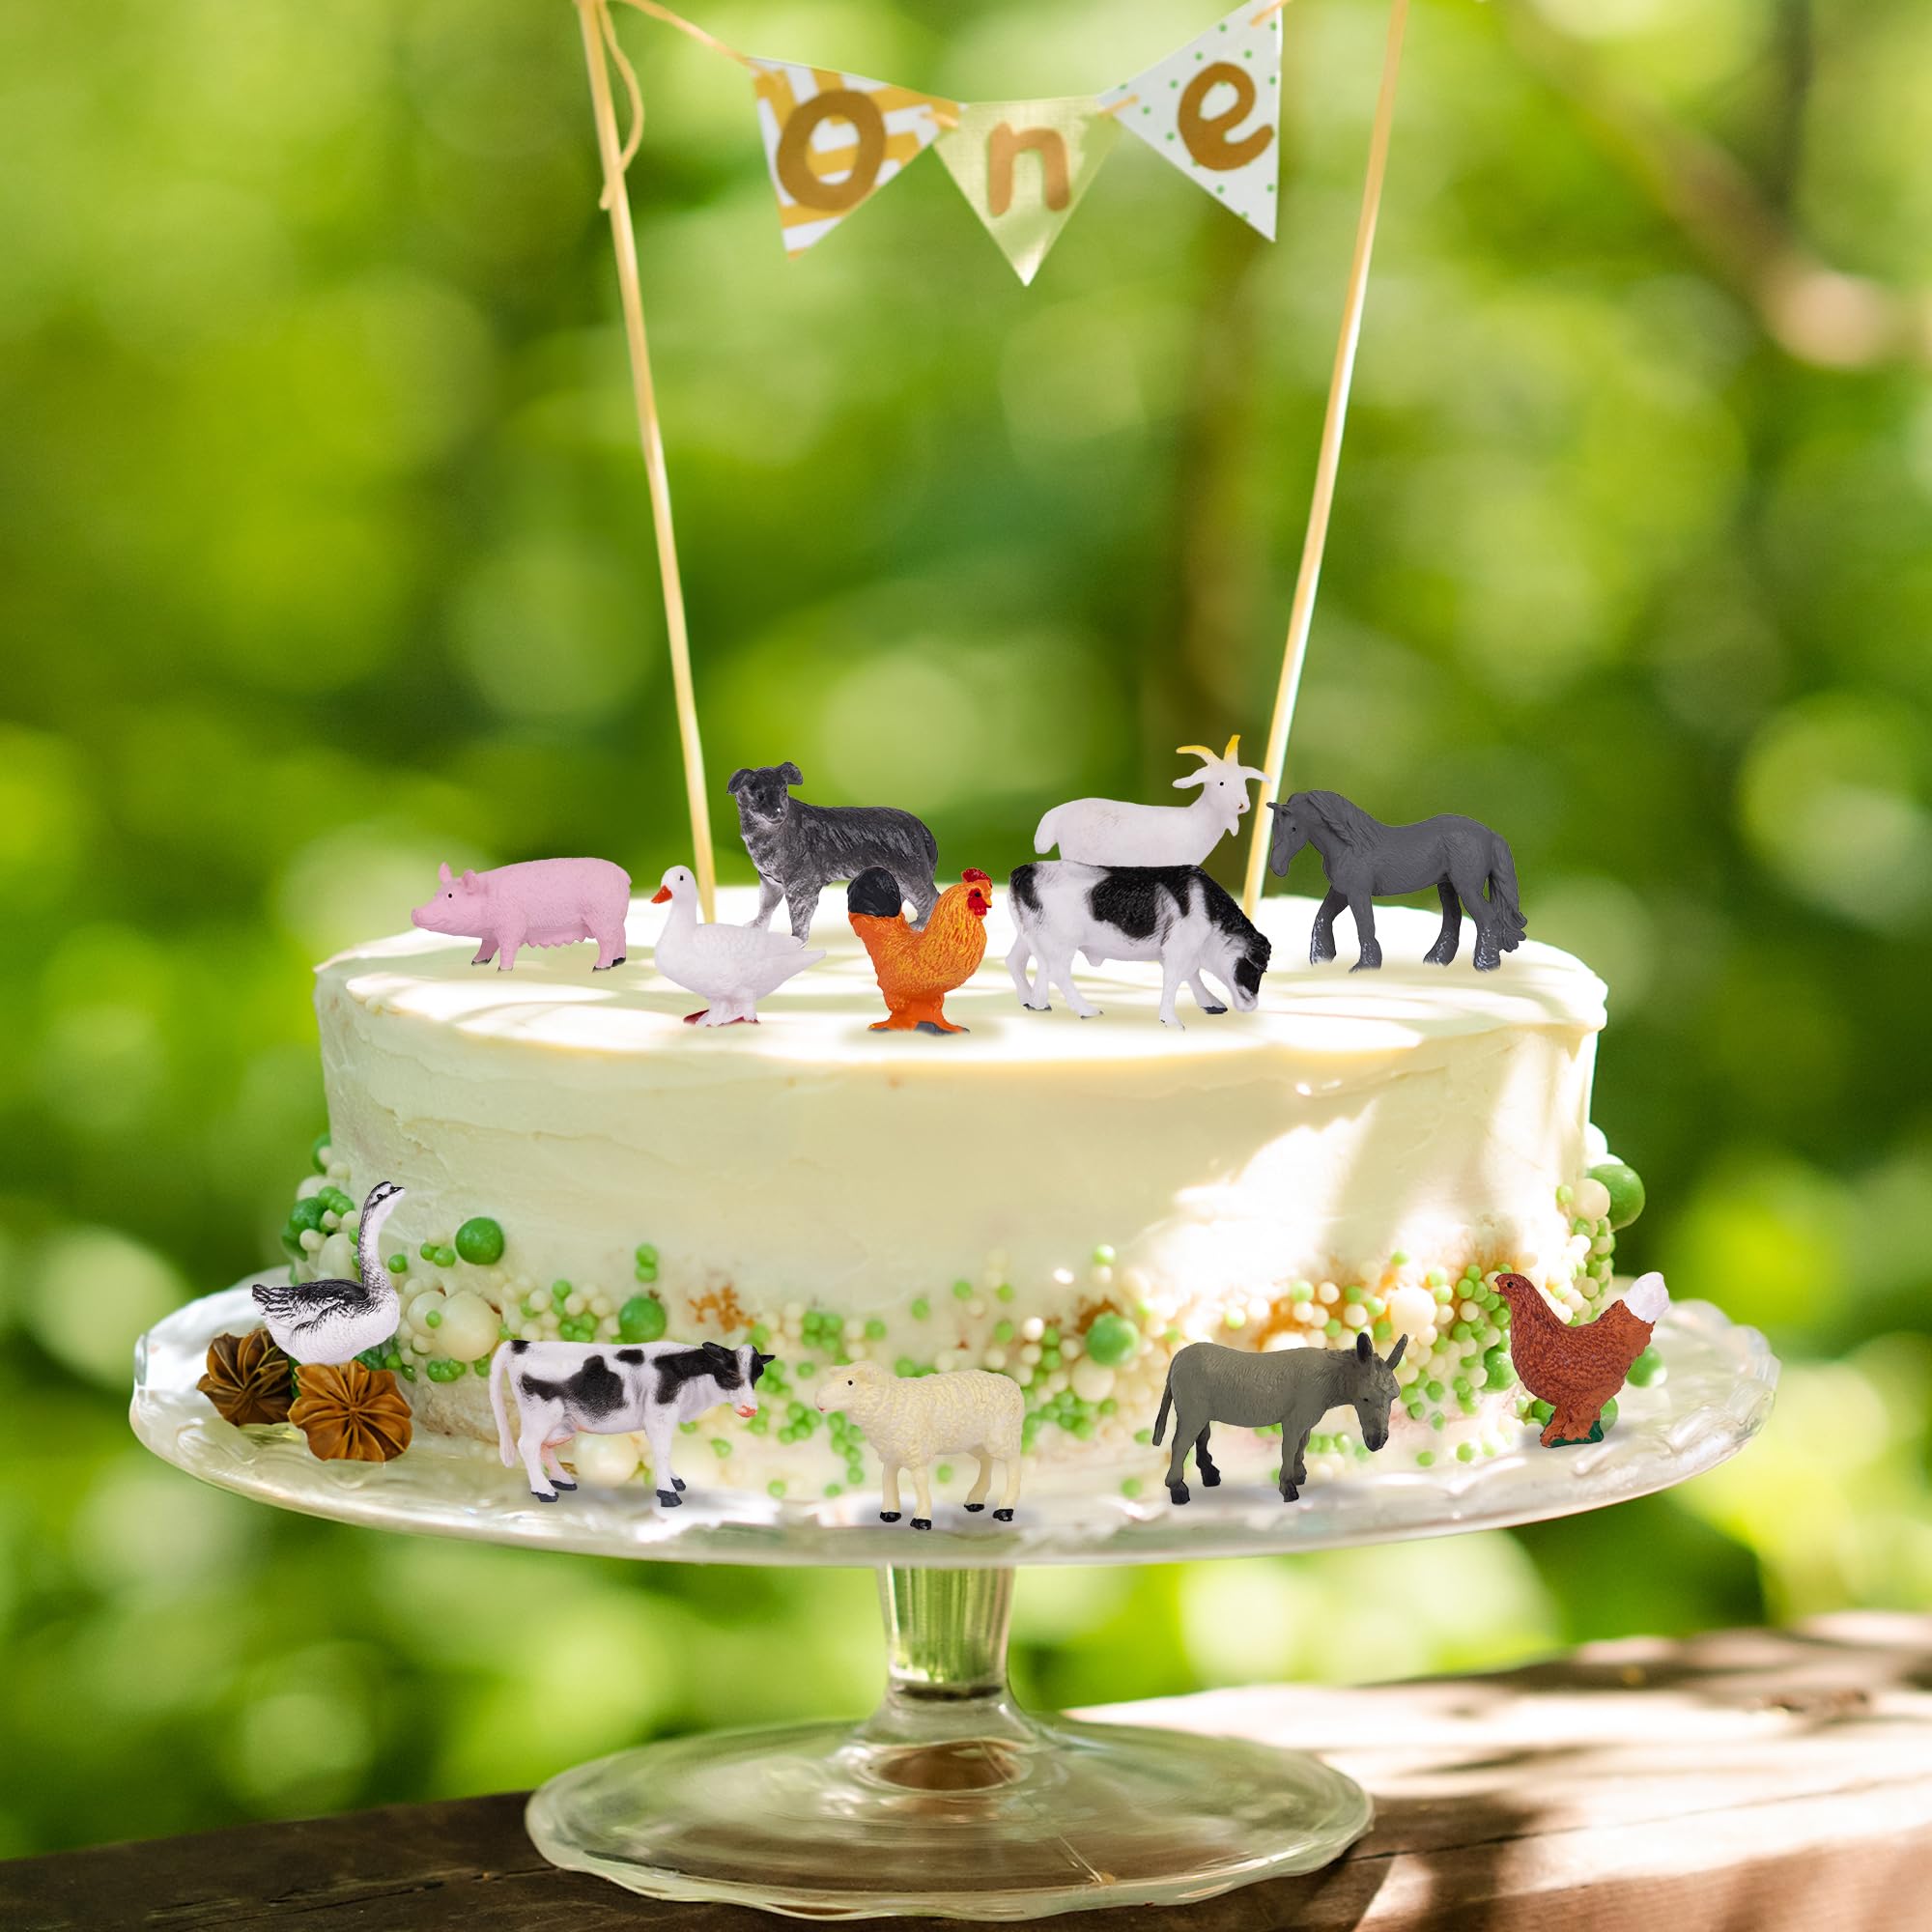 Farm Animal Figurines - Farm Animal Figures Set Includes 12 Pieces - 2 inch Barnyard Farm Animal Cake Toppers with a Lifelike Design